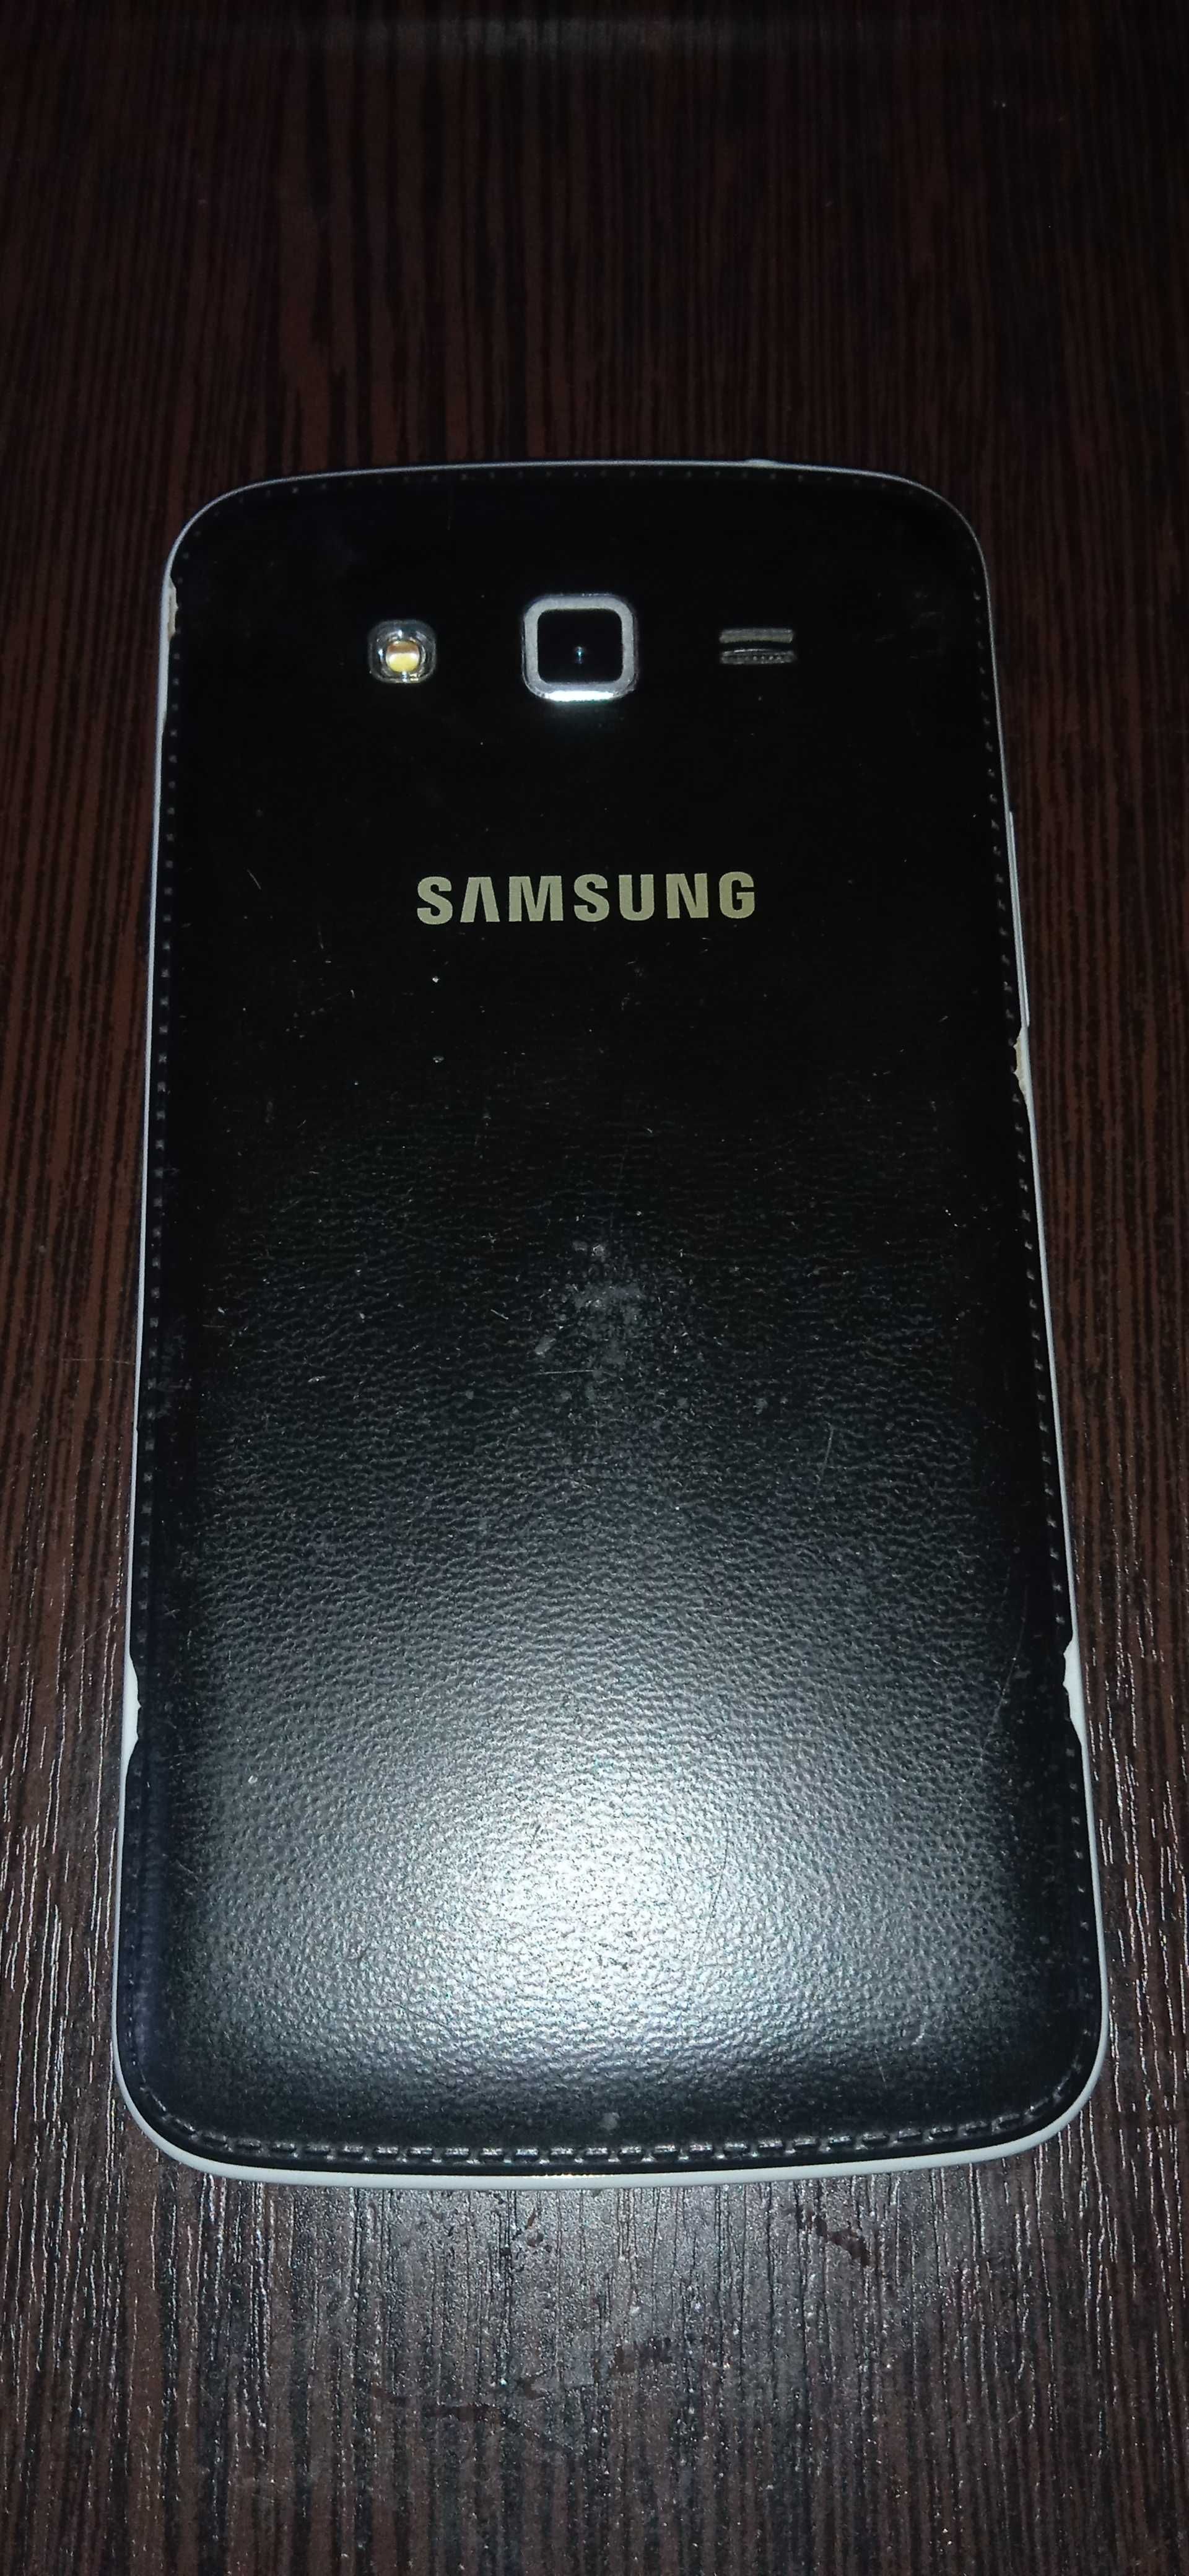 Samsung Galaxy Grand 2 Duos телефон, смартфон,